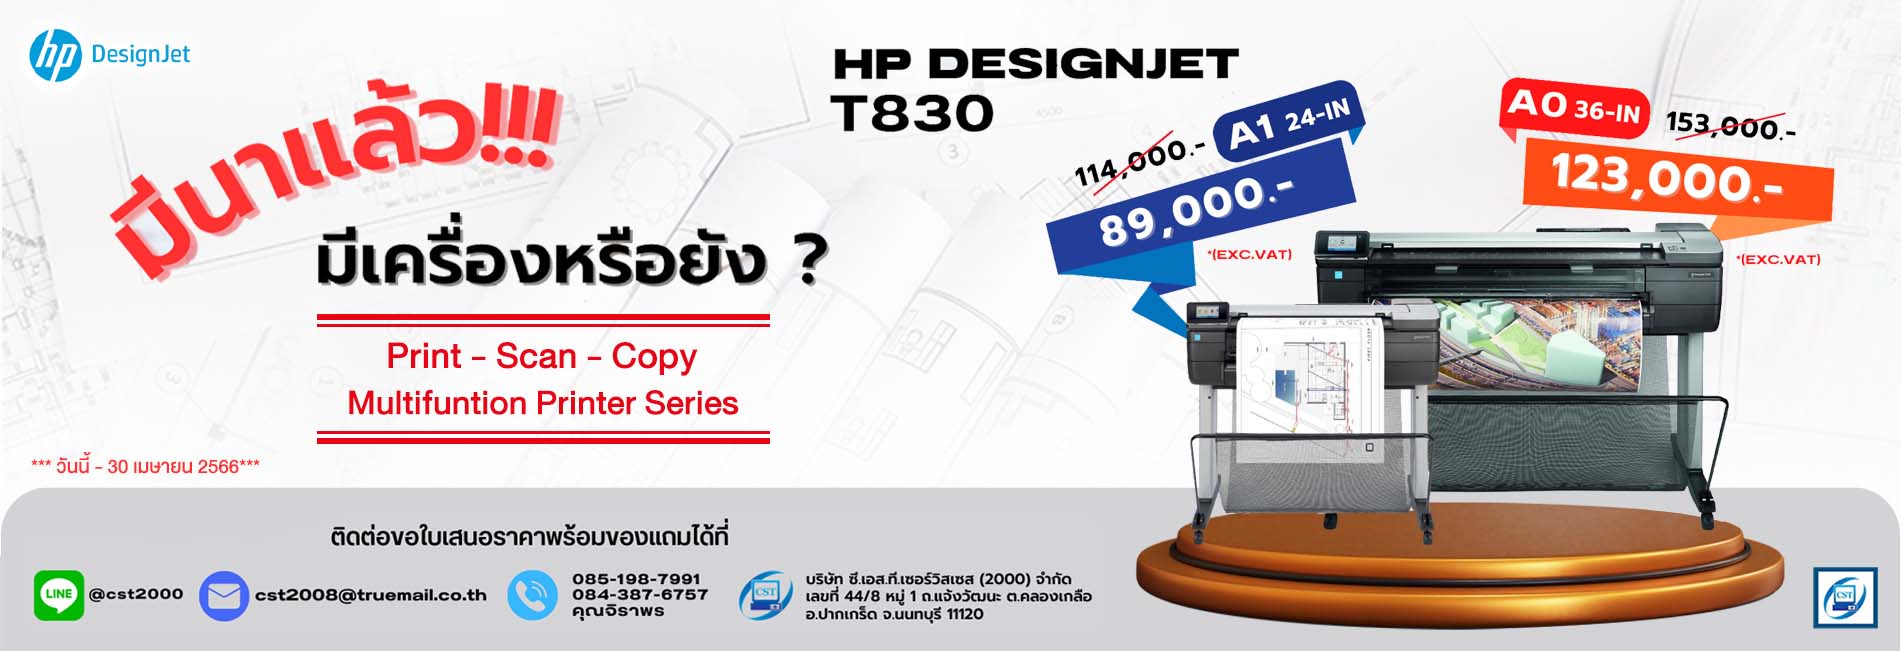 HP DesignJet T830-มีนาแล้วมีเครื่องแล้วหรือยัง